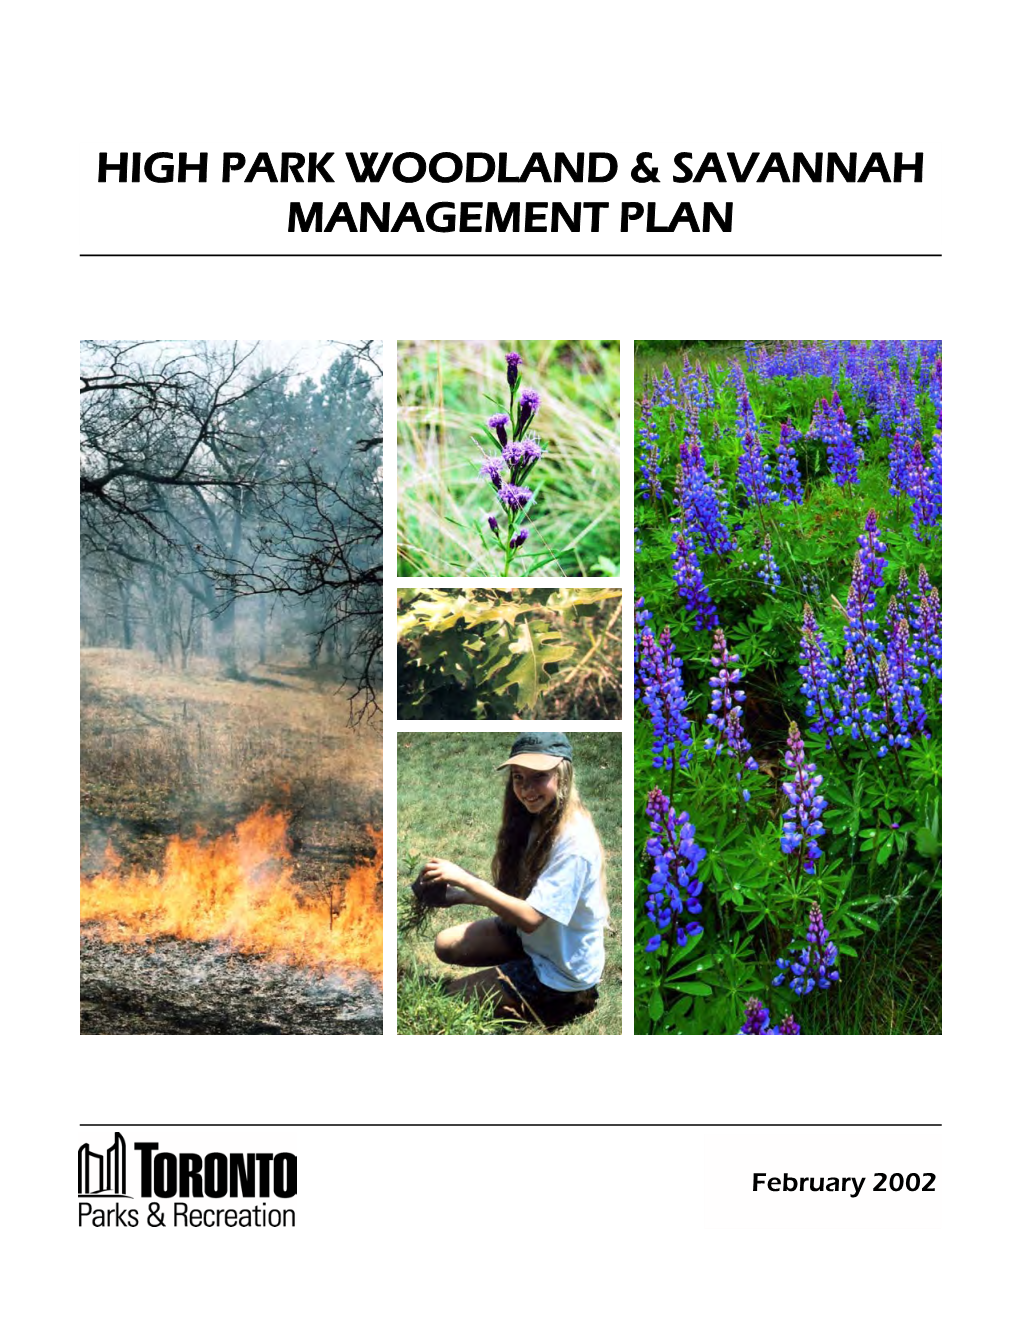 High Park Woodland & Savannah Management Plan, 2002